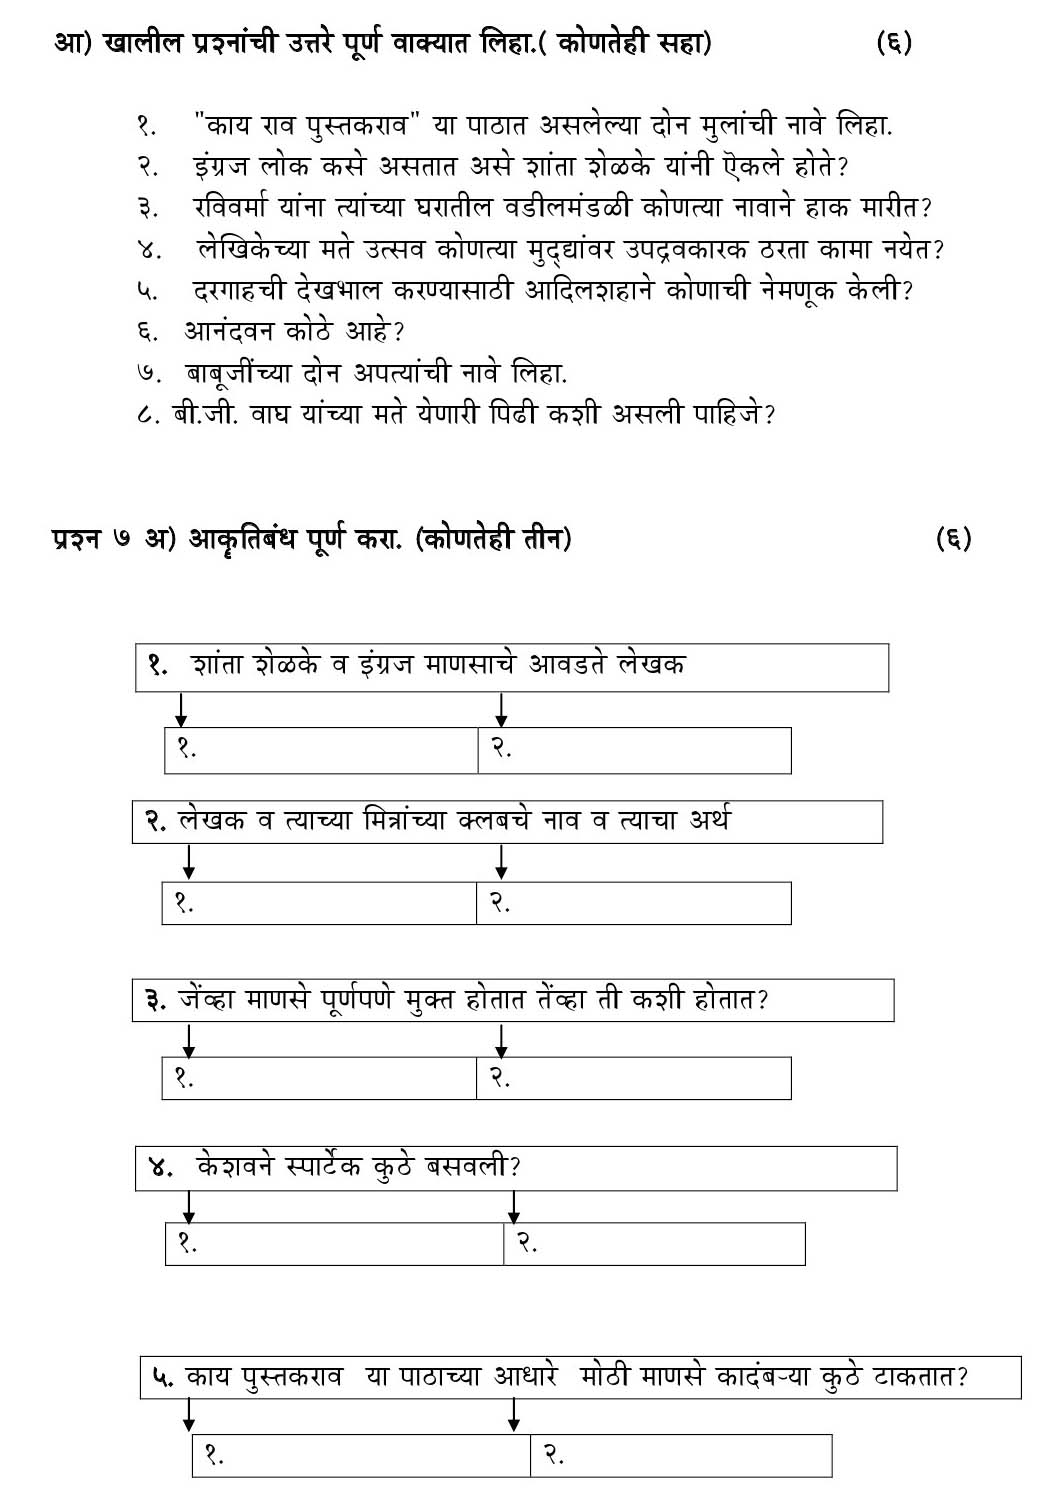 Marathi CBSE Class X Sample Question Paper 2018-19 - Image 6